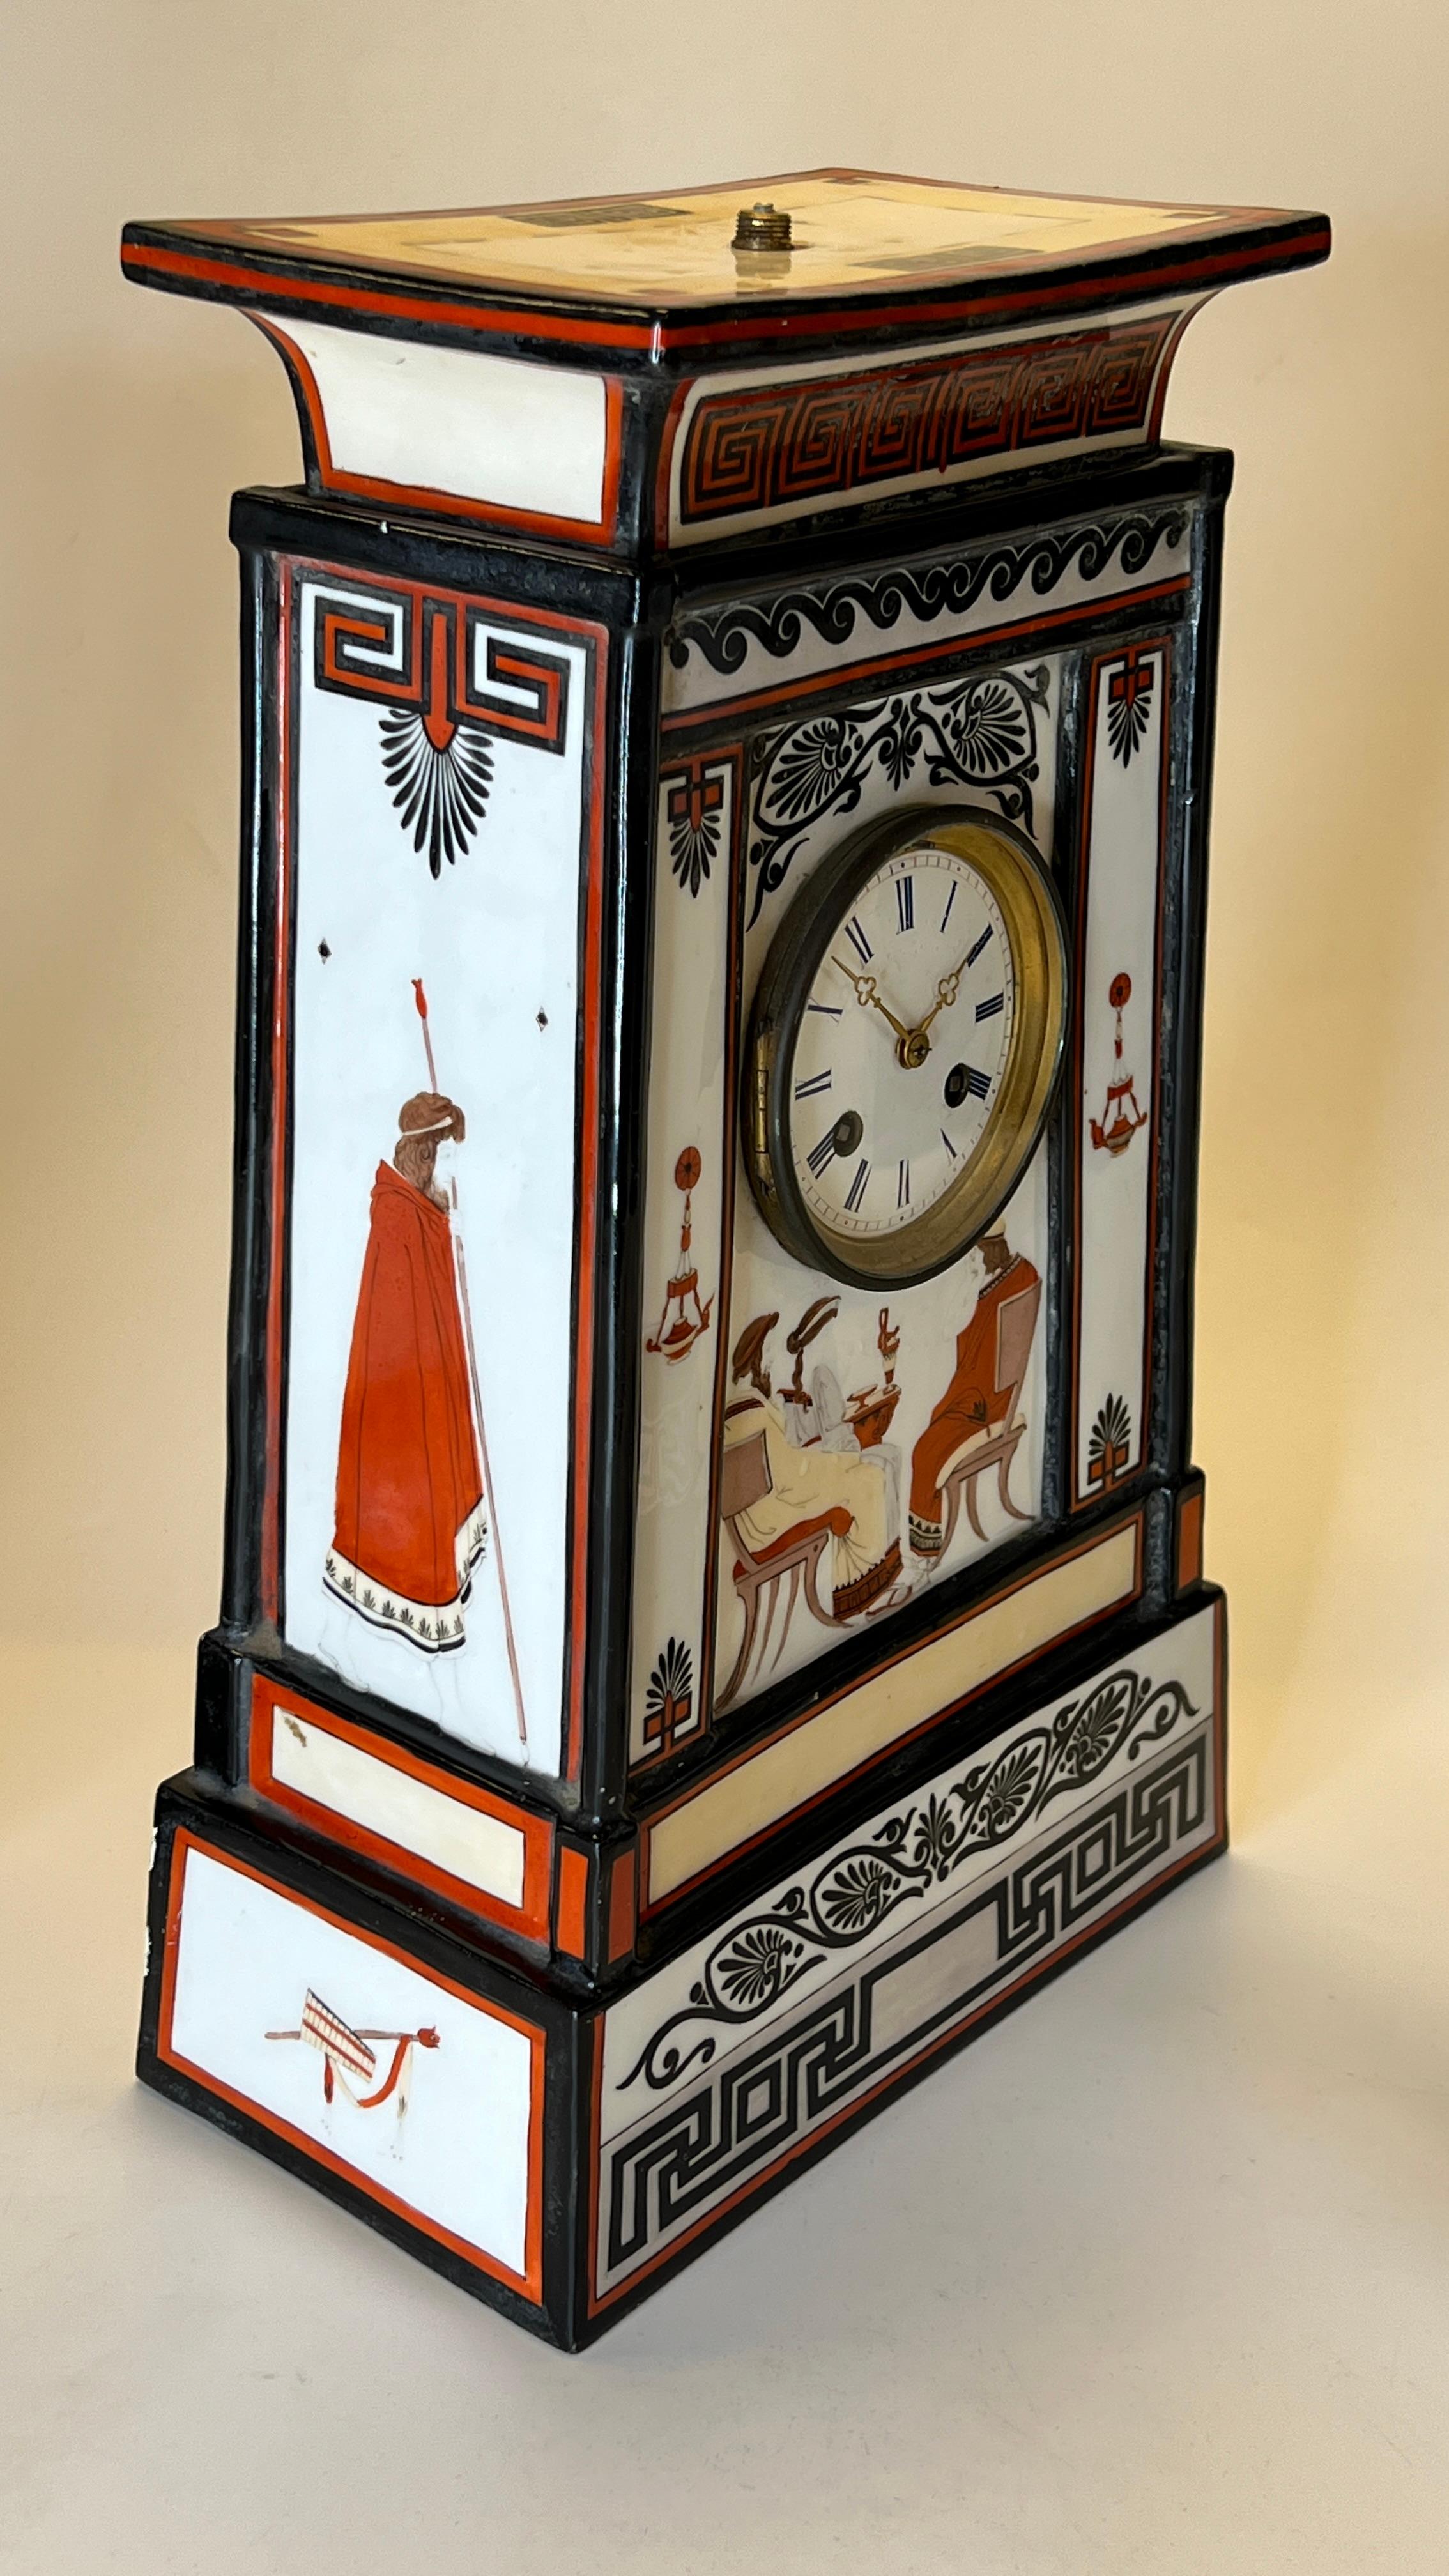 royal crown derby clock